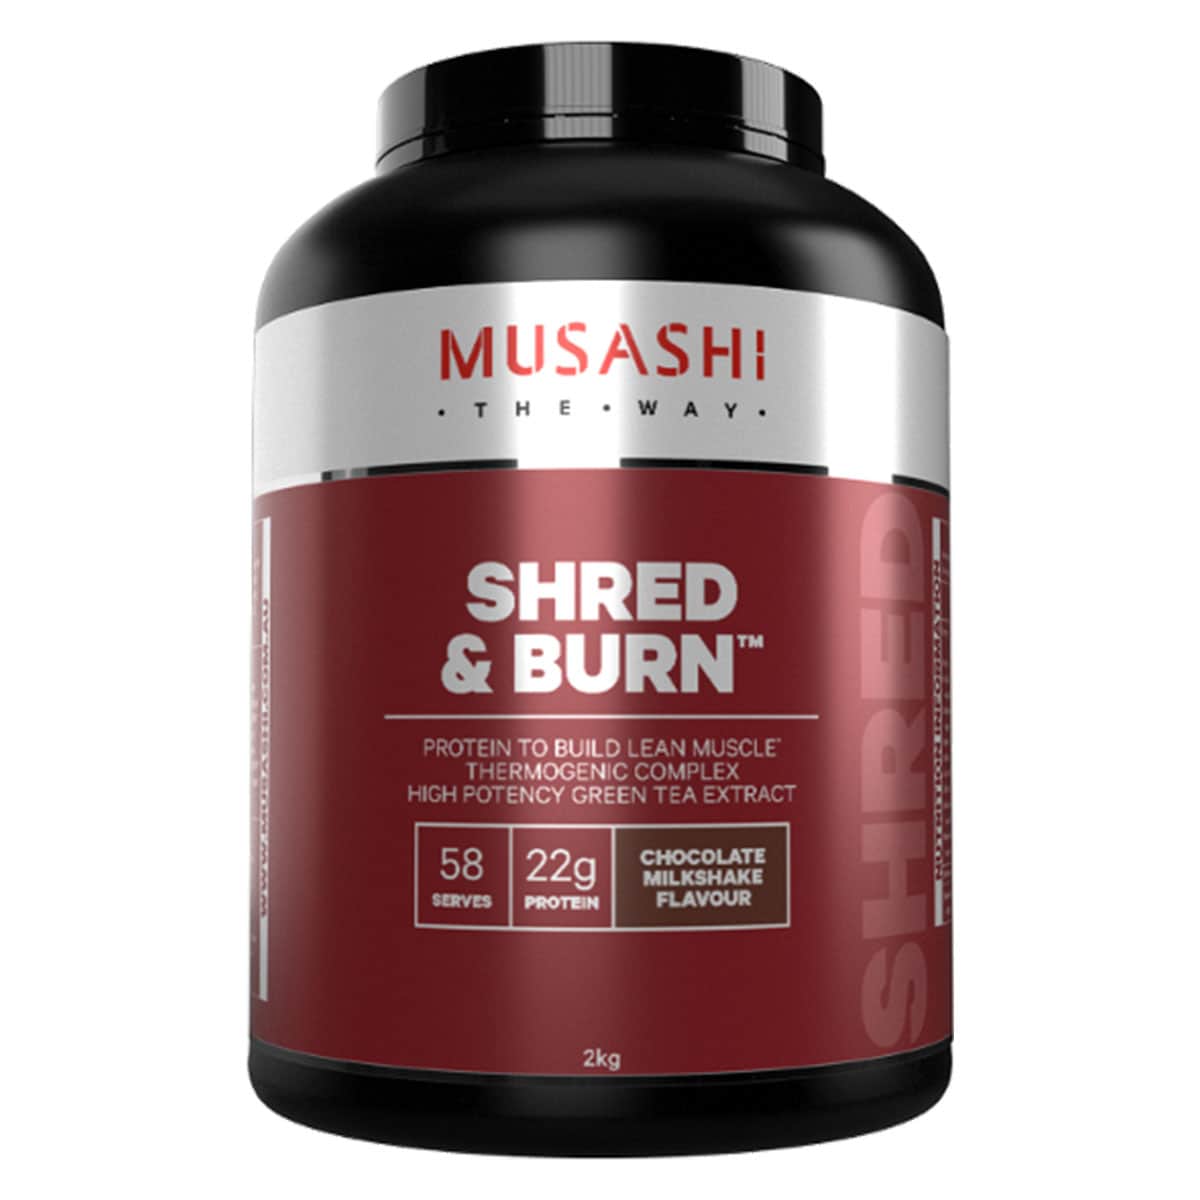 Musashi Shred & Burn Protein Chocolate Milkshake 2kg Australia